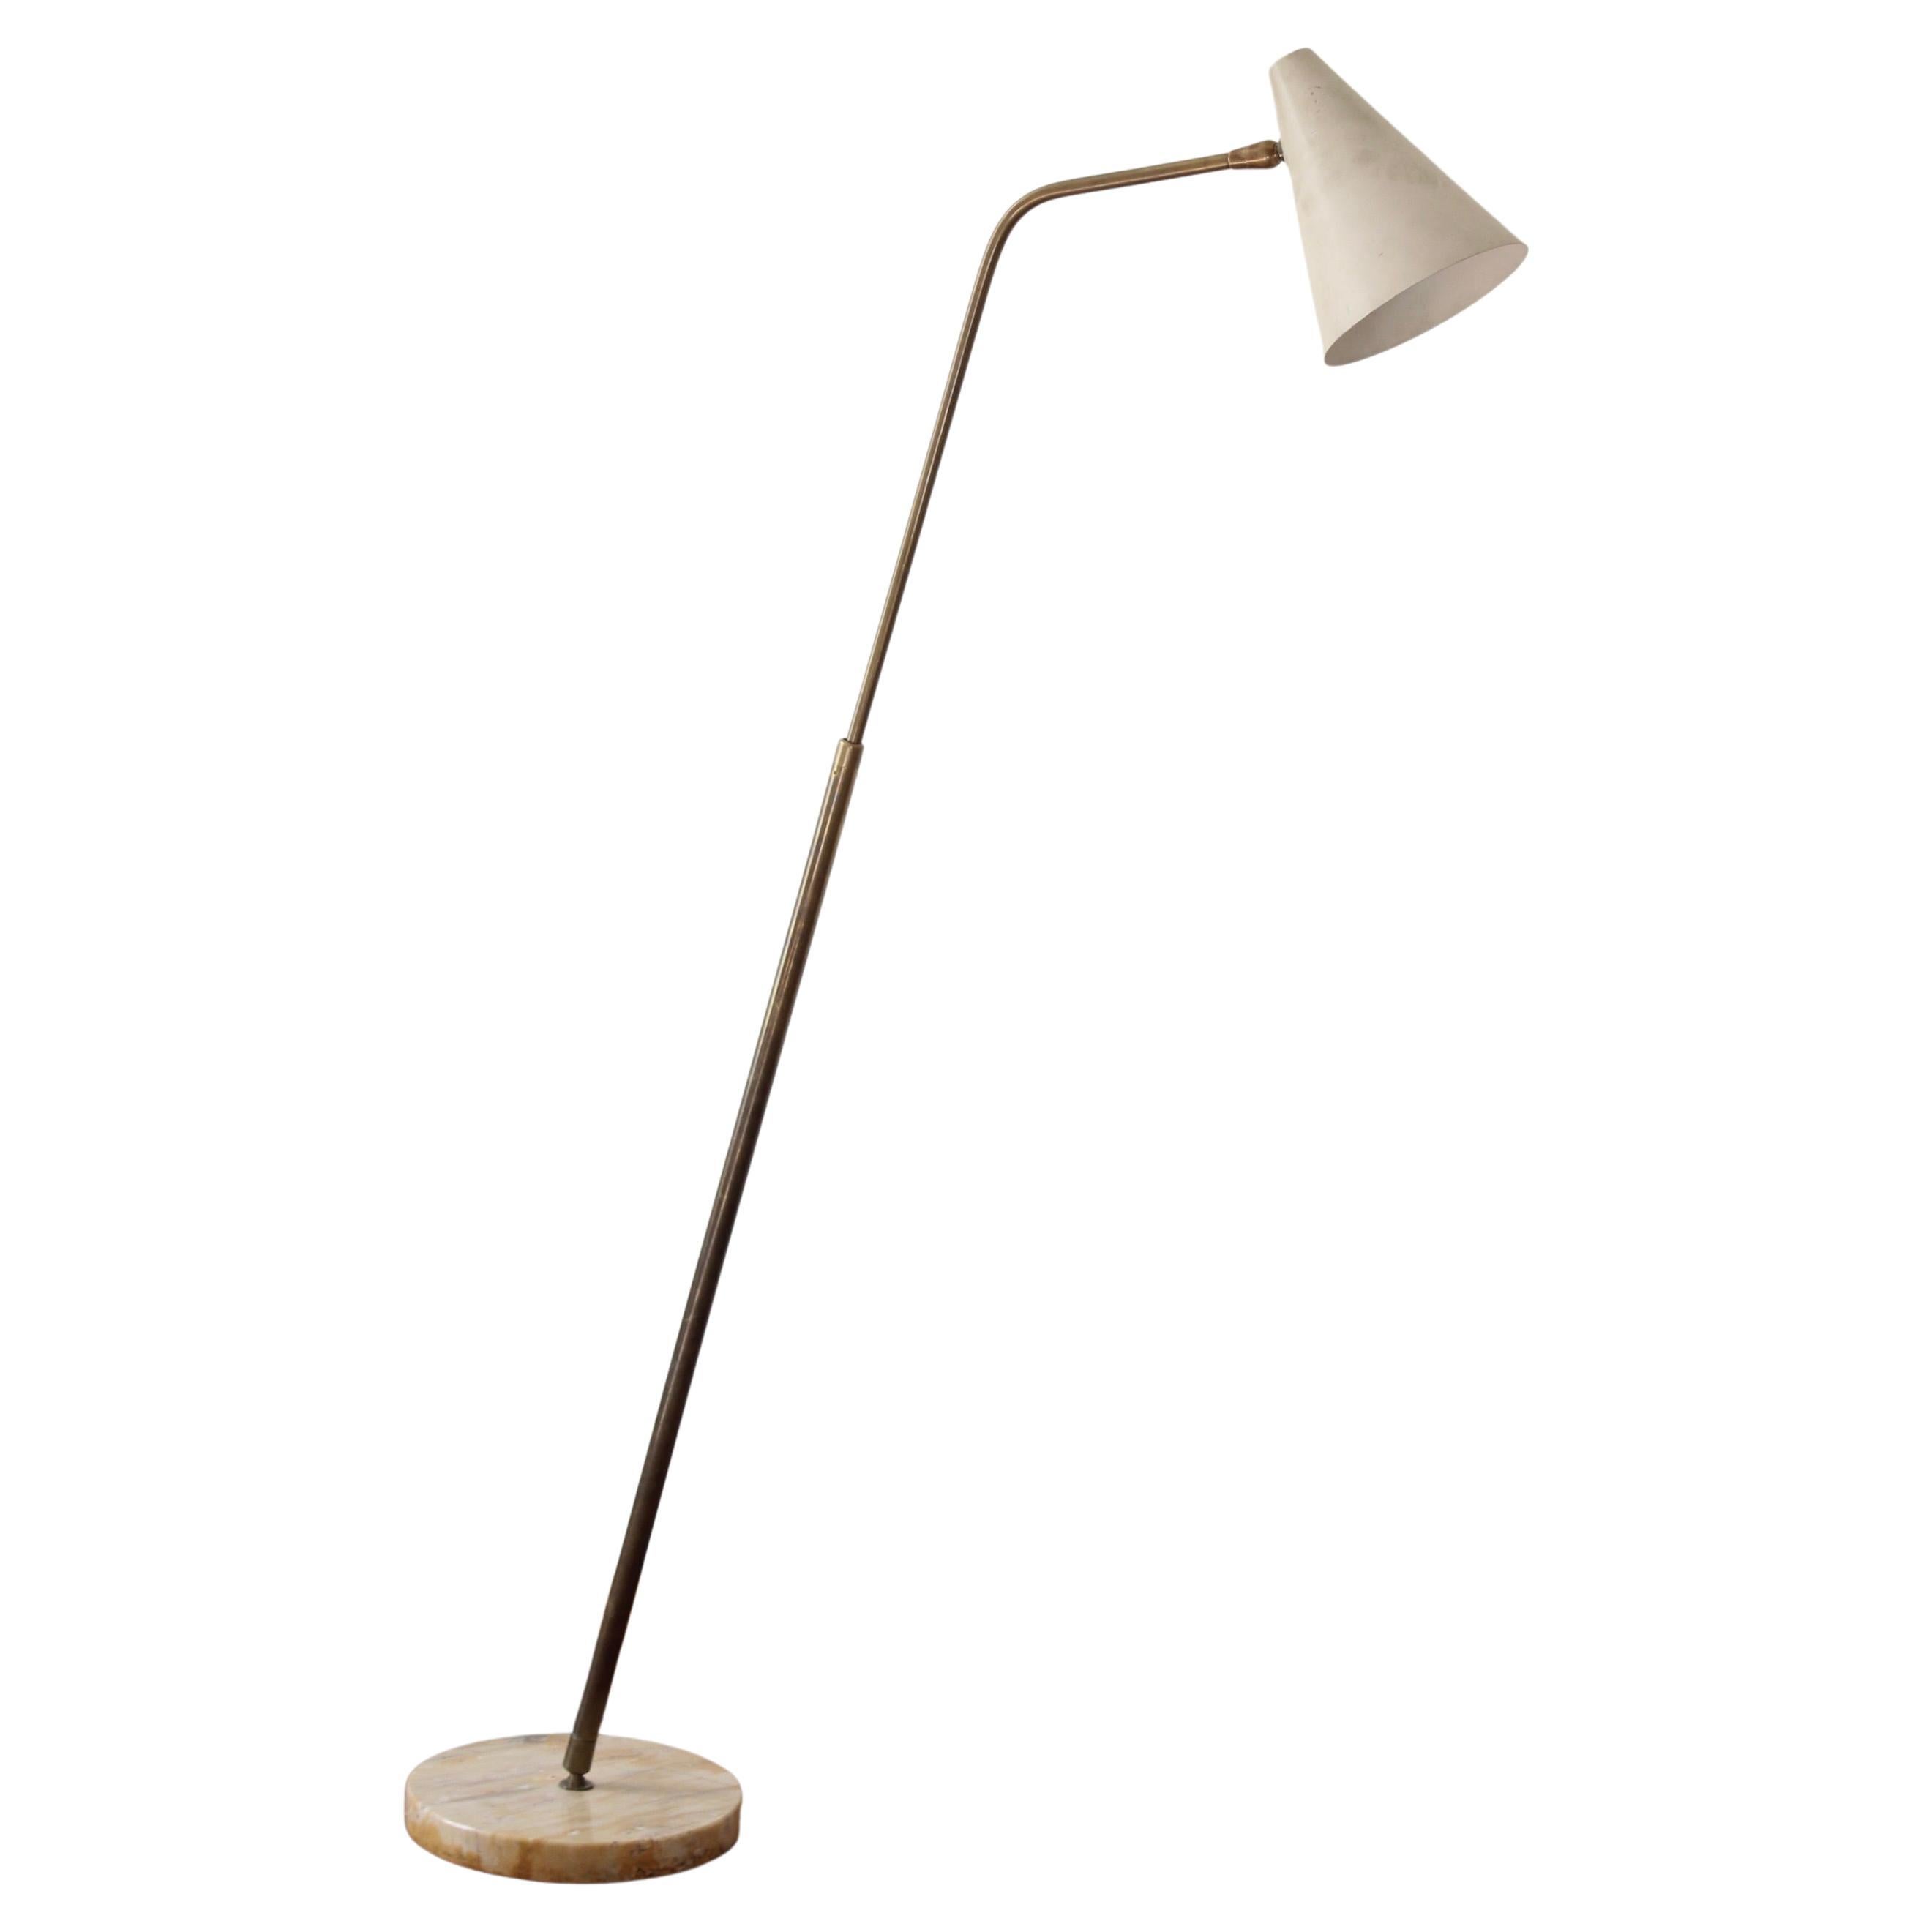 Giuseppe Ostuni, Adjustable Floor Lamp, Brass, Metal, Marble, Italy, 1950s